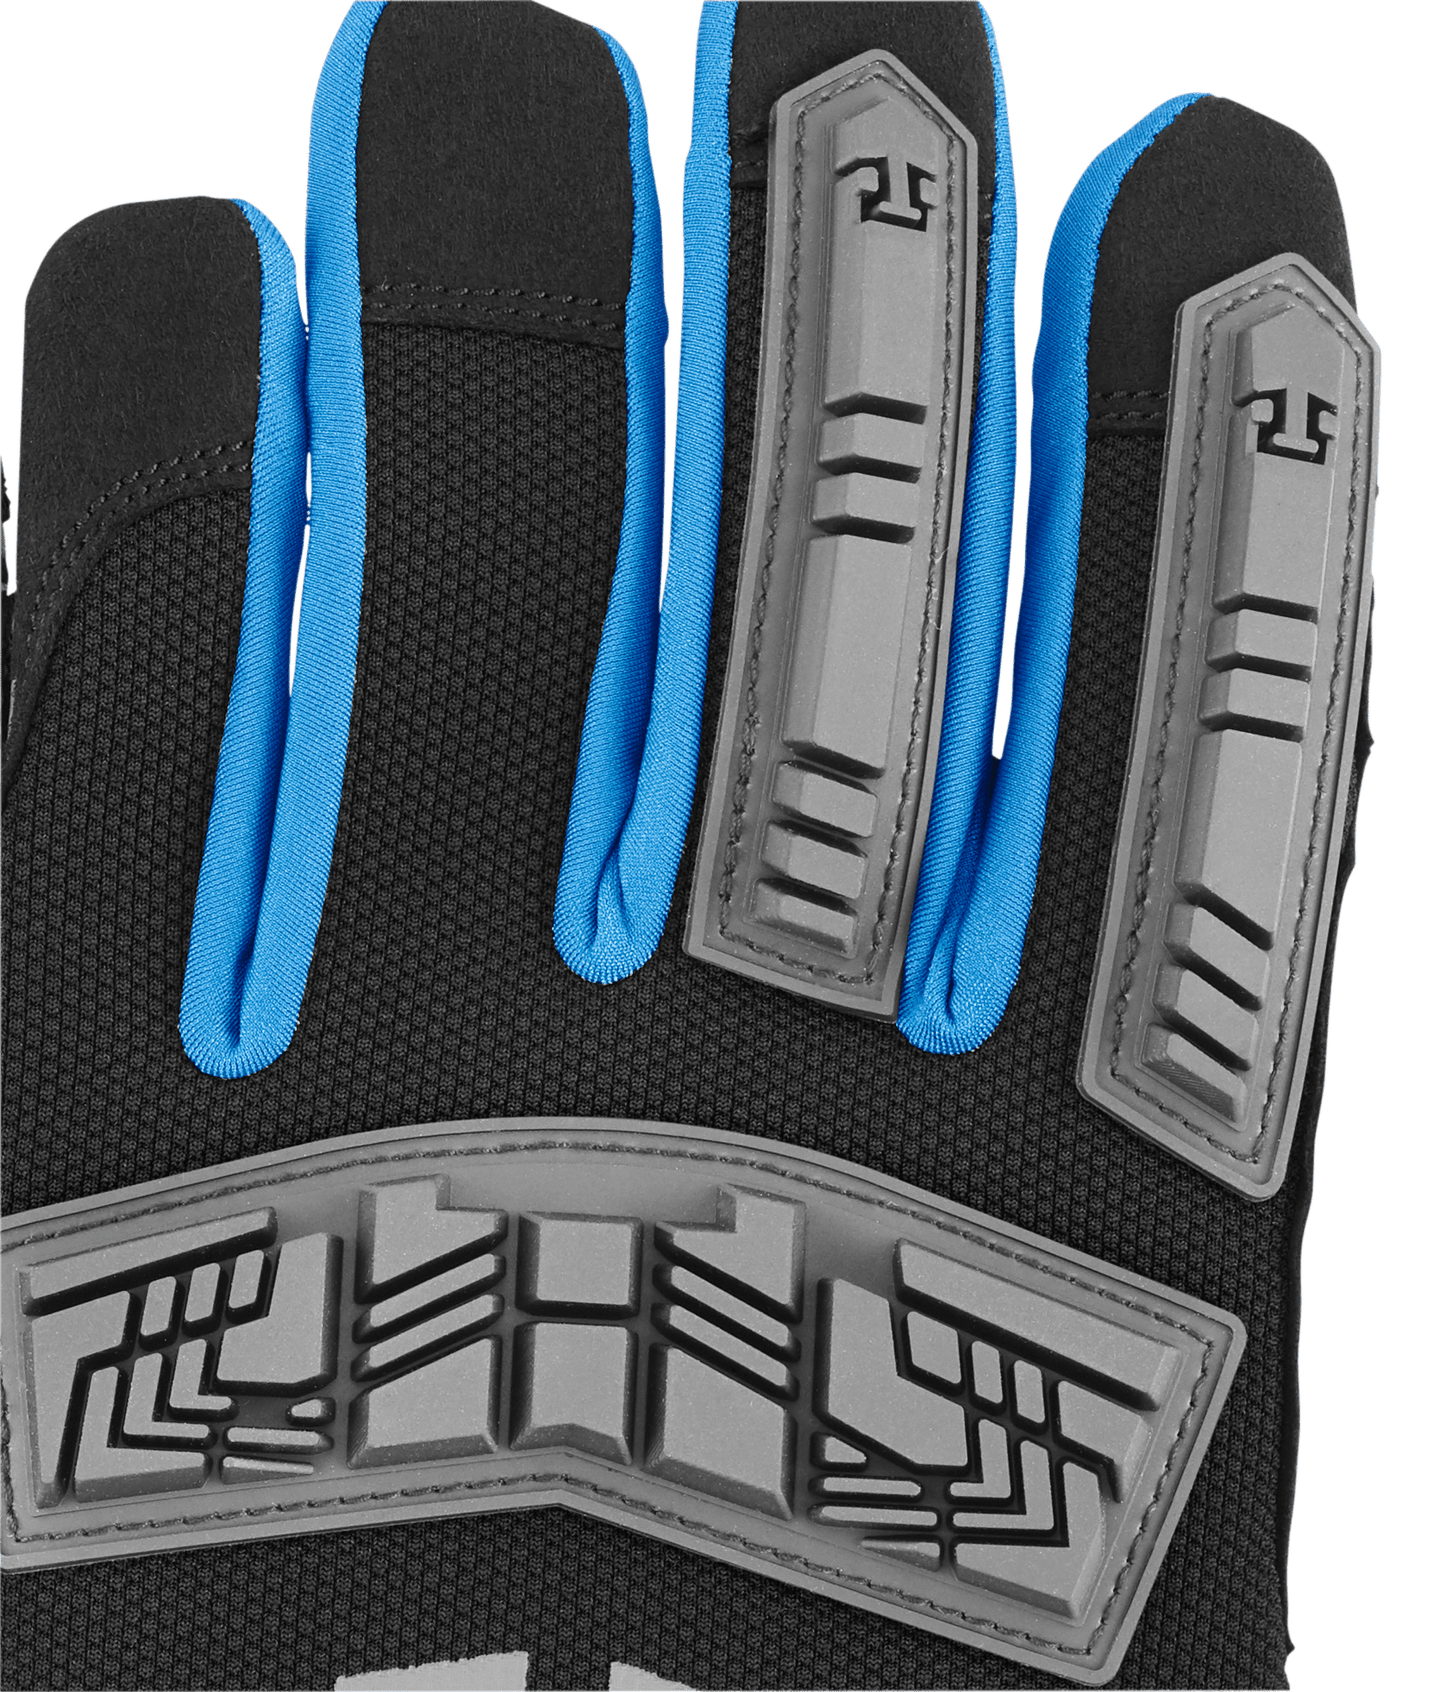 Performance Impact Gloves - Large